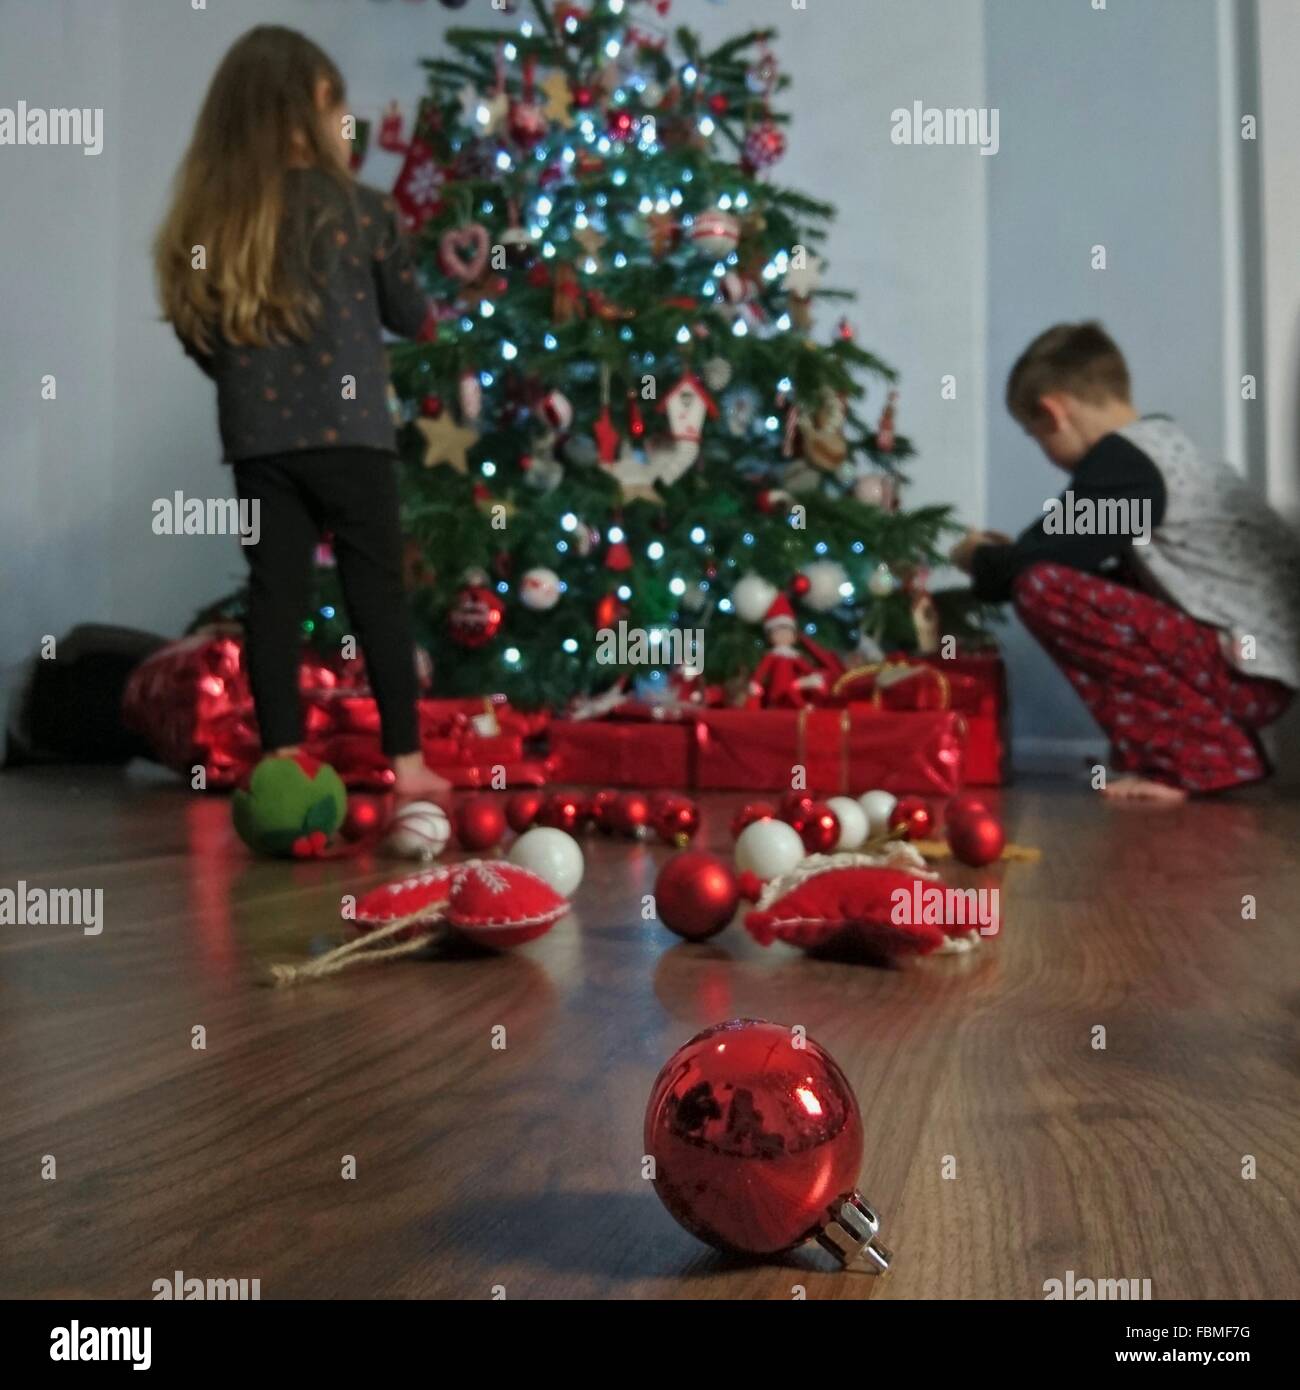 Boy and girl decorating Christmas tree Stock Photo